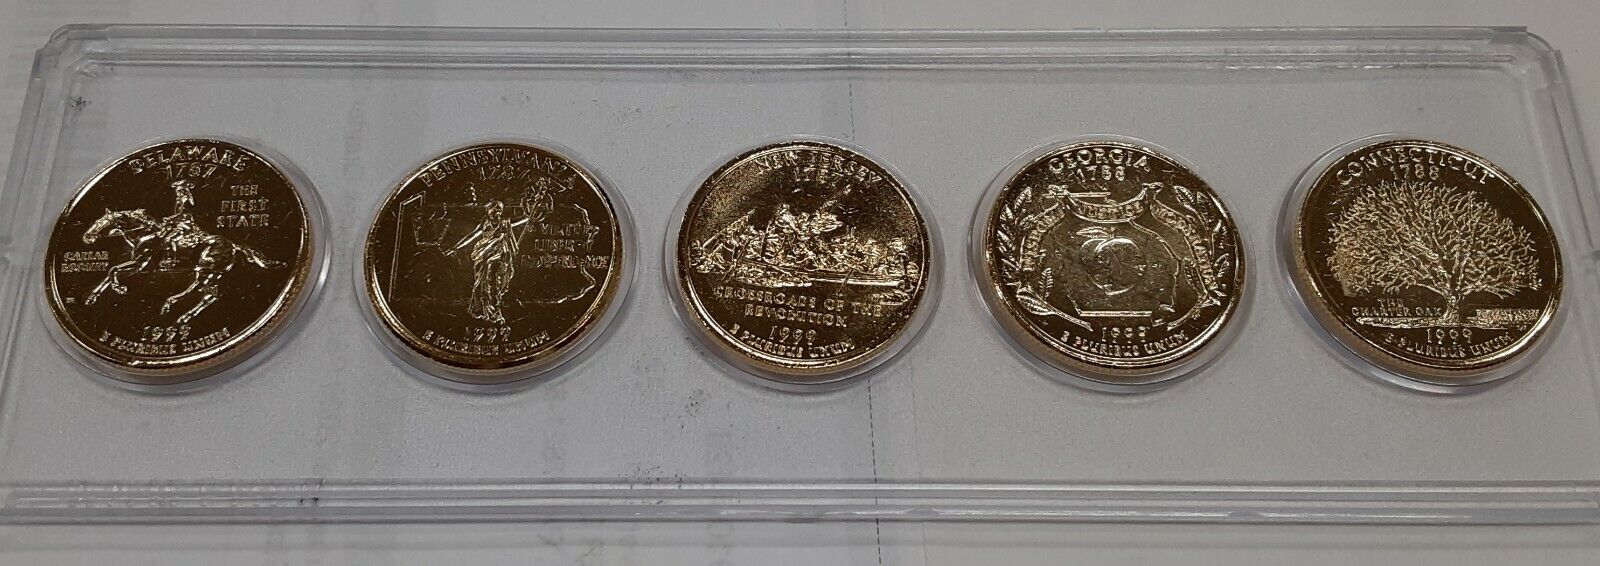 1999-P Statehood Quarter 5 Coin Set Gold Plated in Whitman Holder